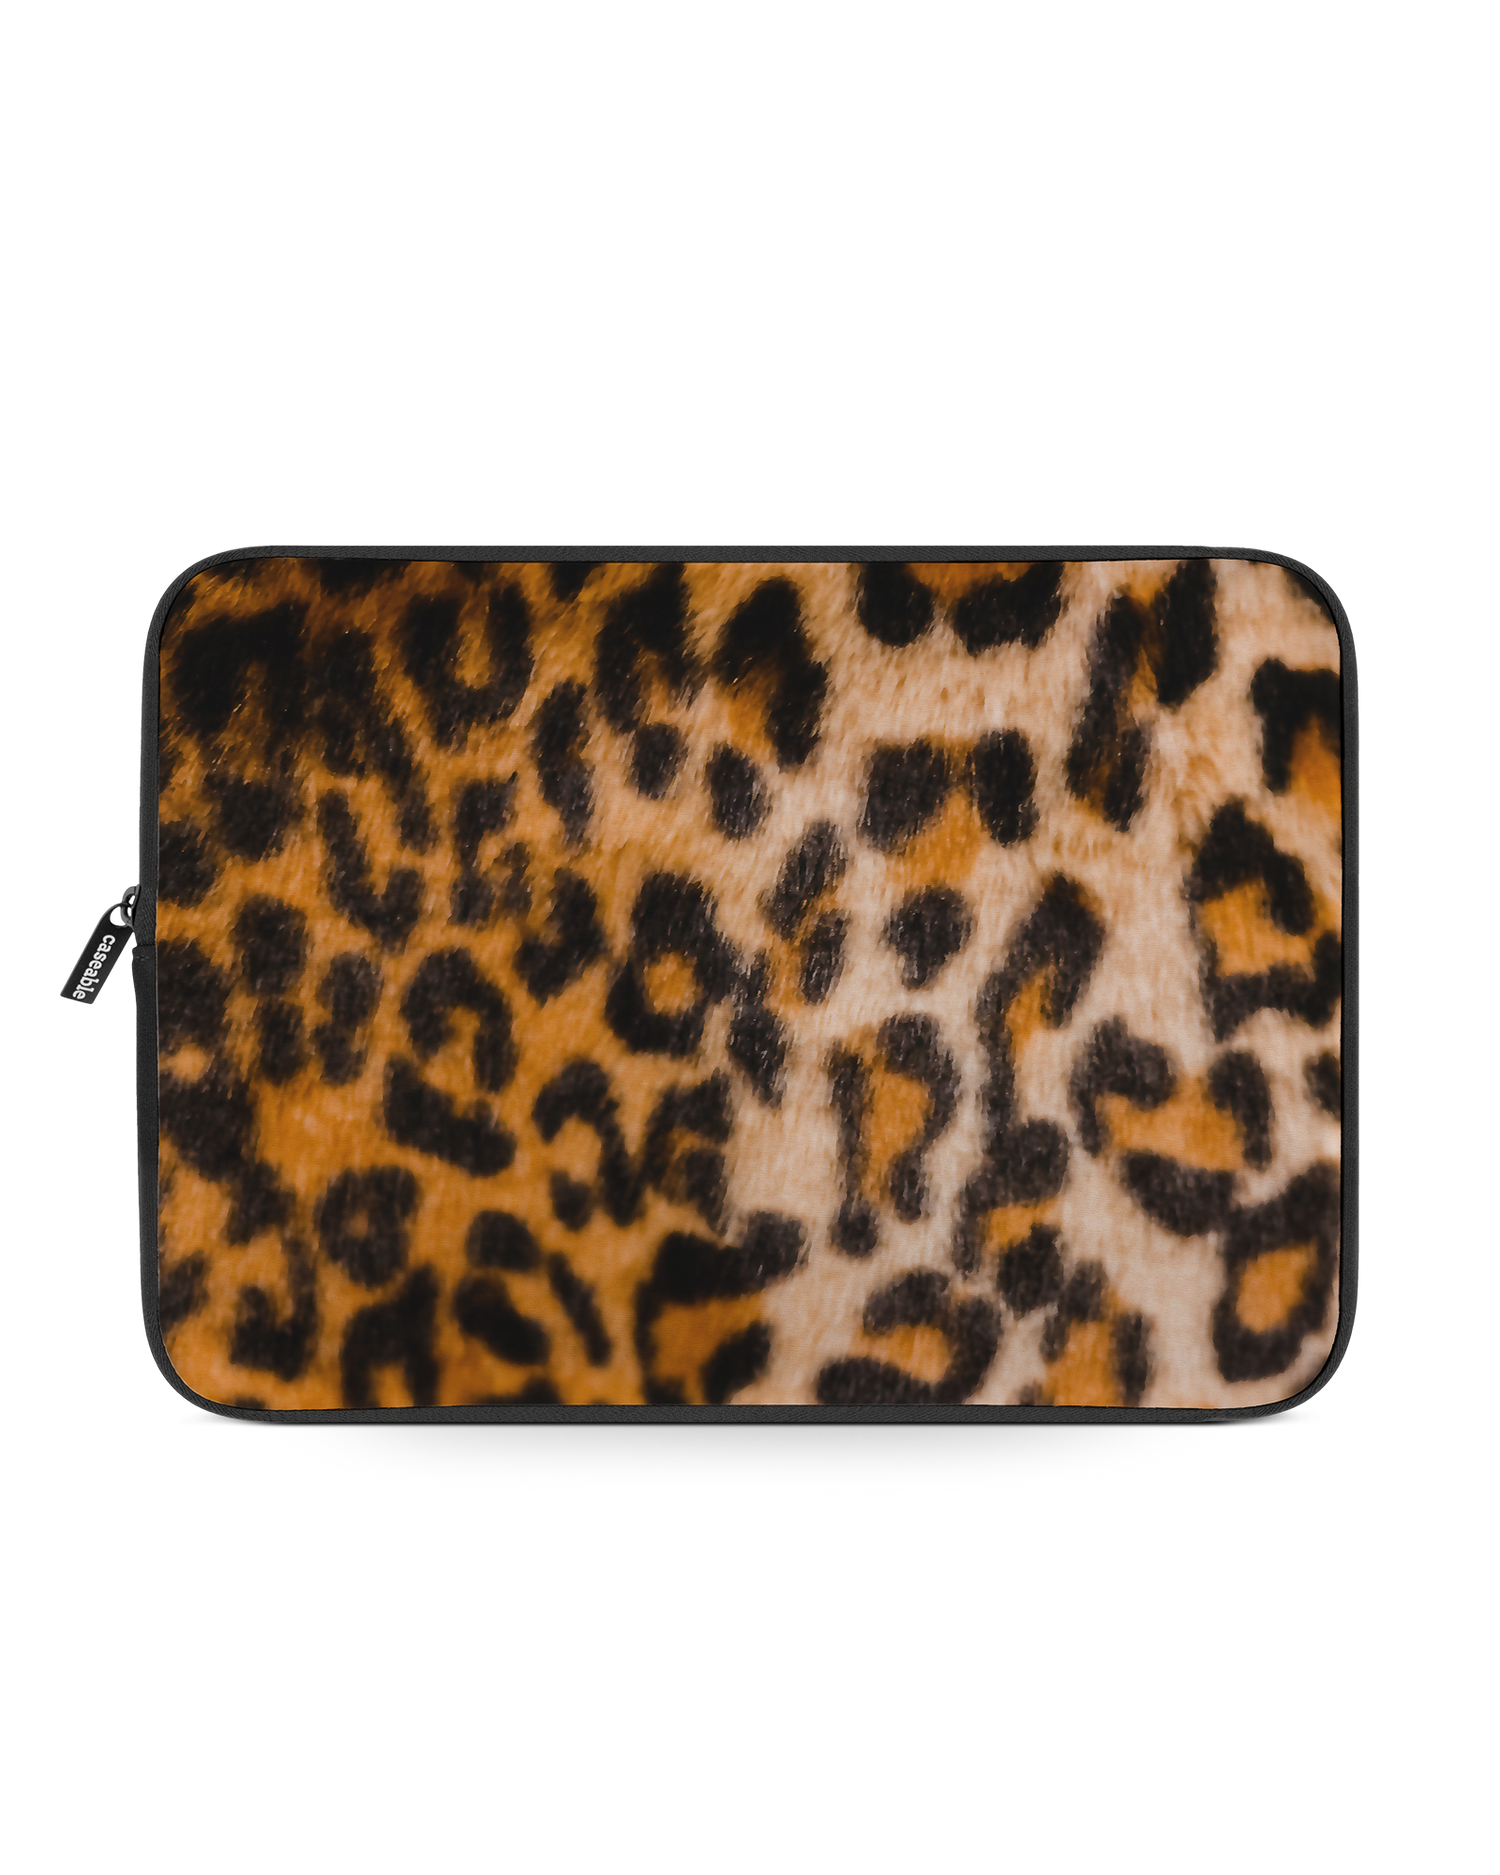 Leopard Pattern Laptop Case 13-14 inch: Front View